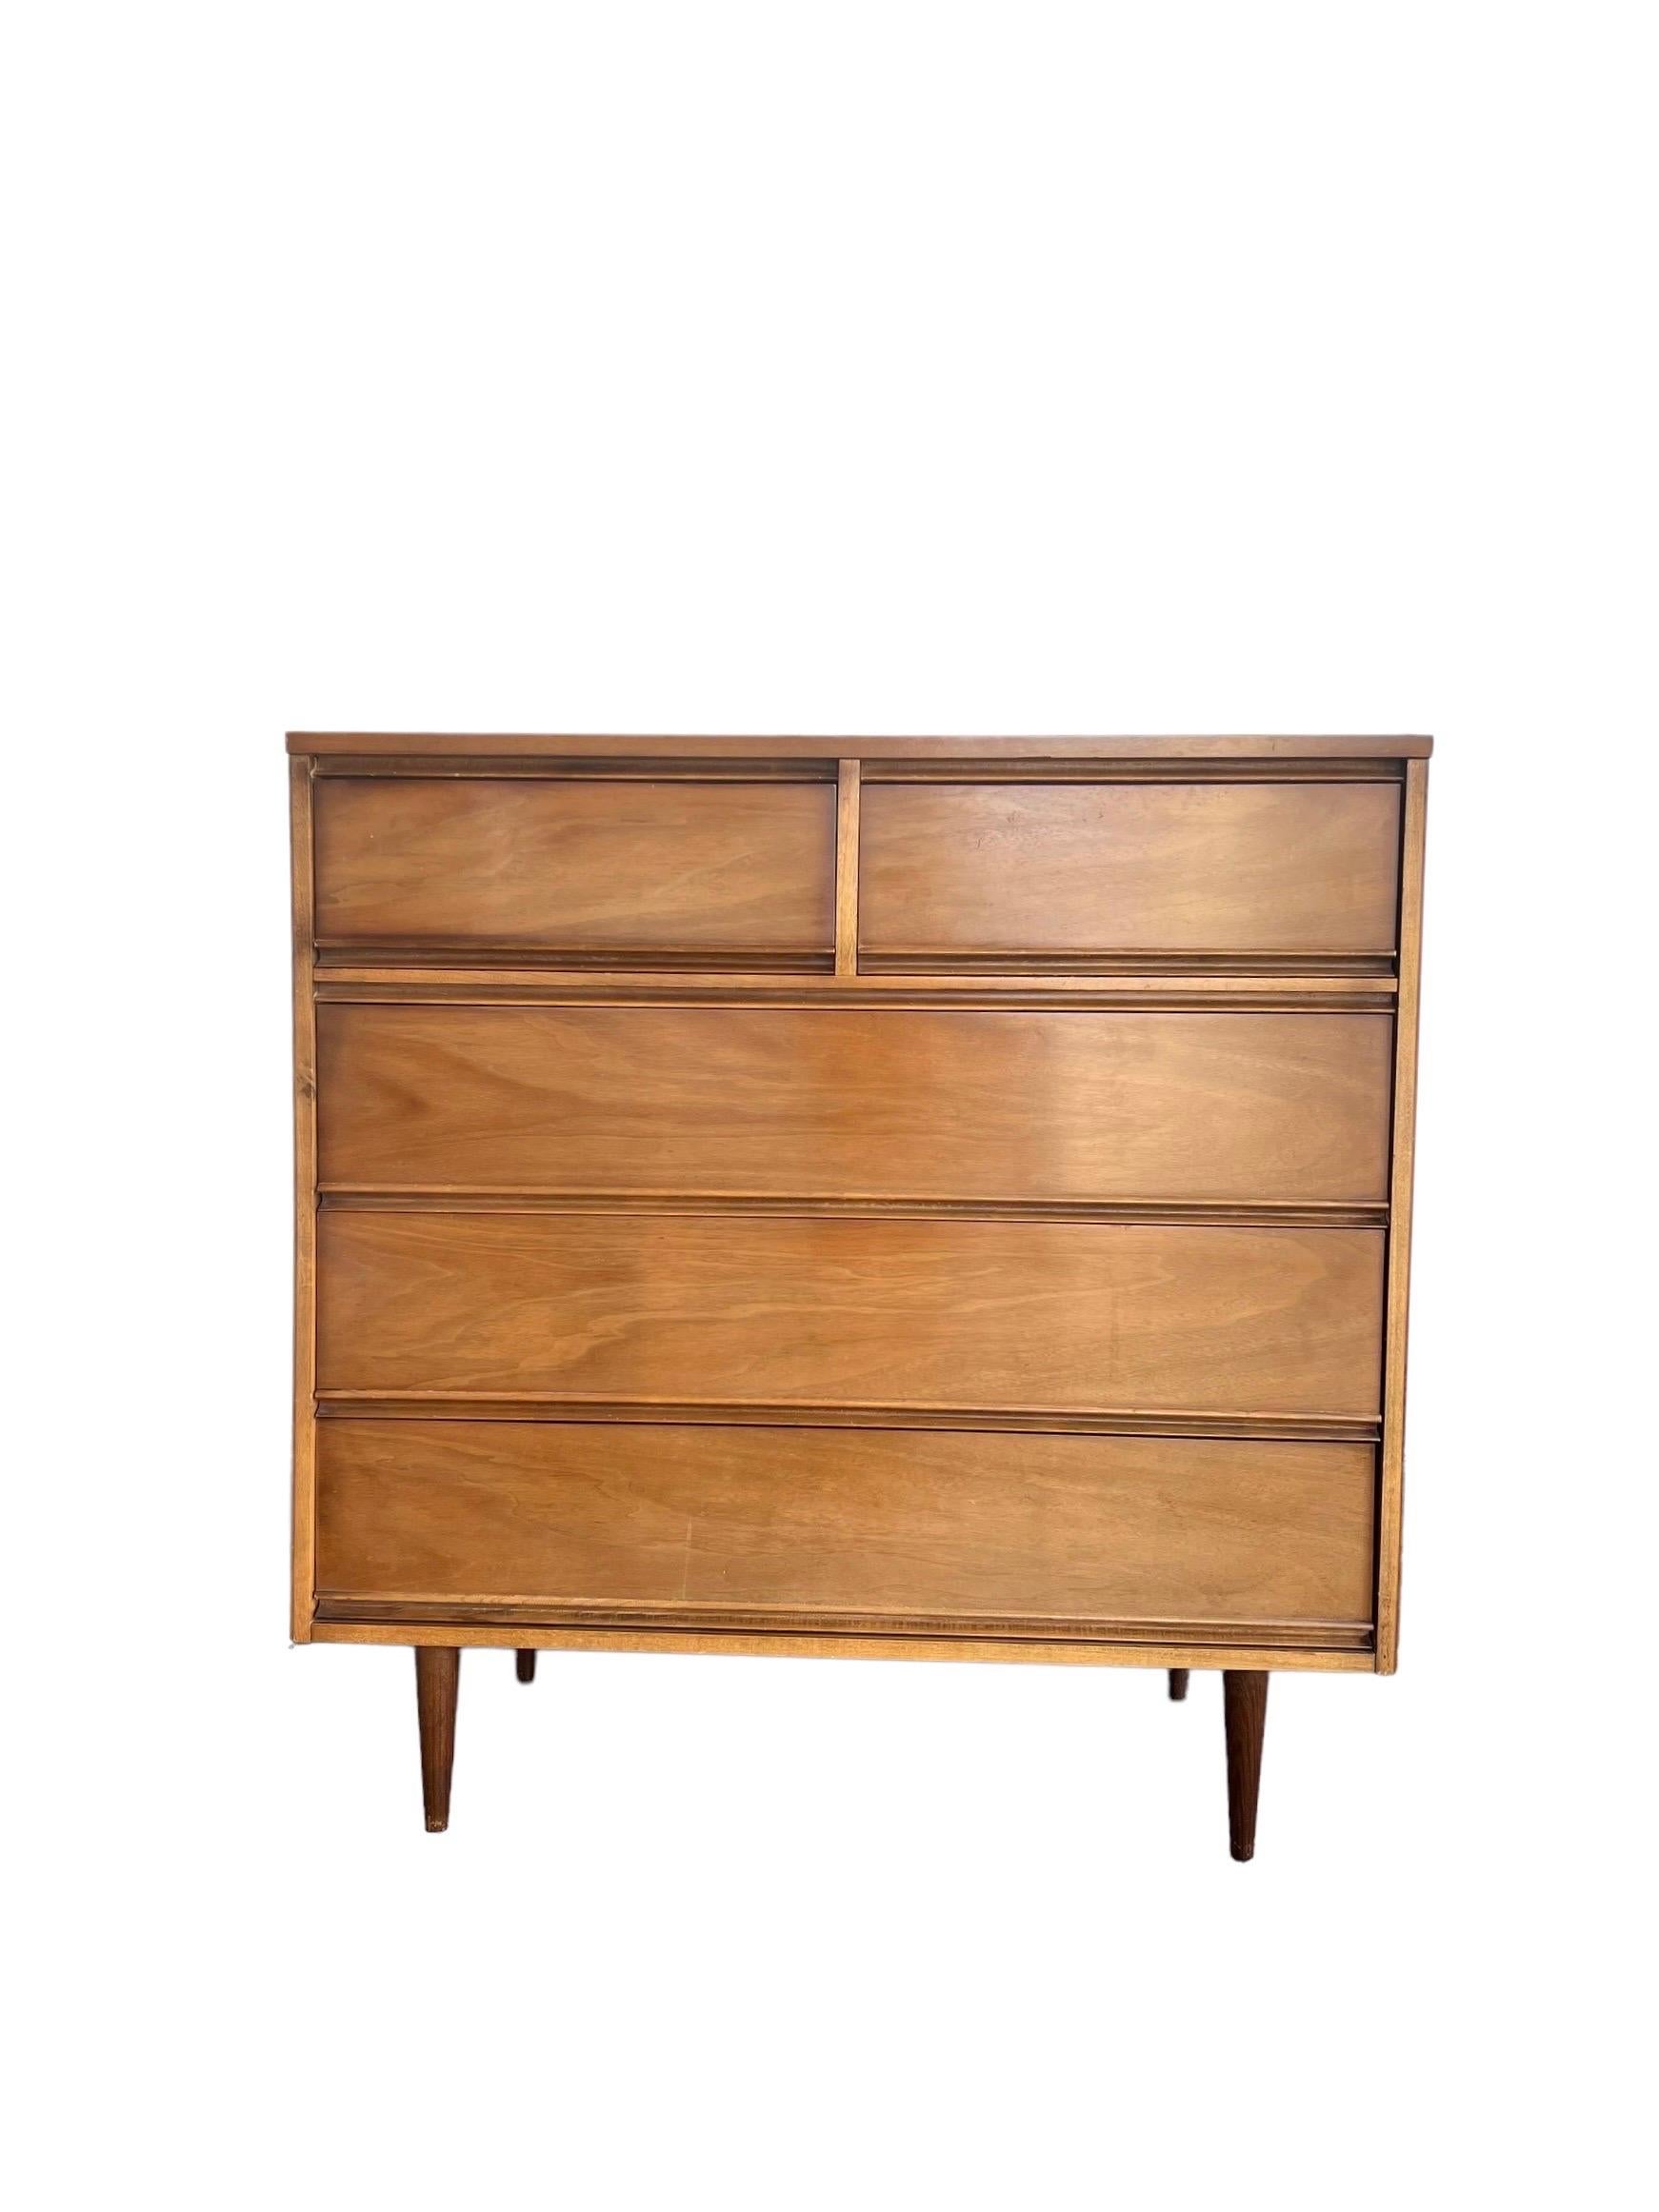 Vintage Mid-Century Modern dresser dovetailed drawers walnut.

Measures: 41W, 19D, 42H.